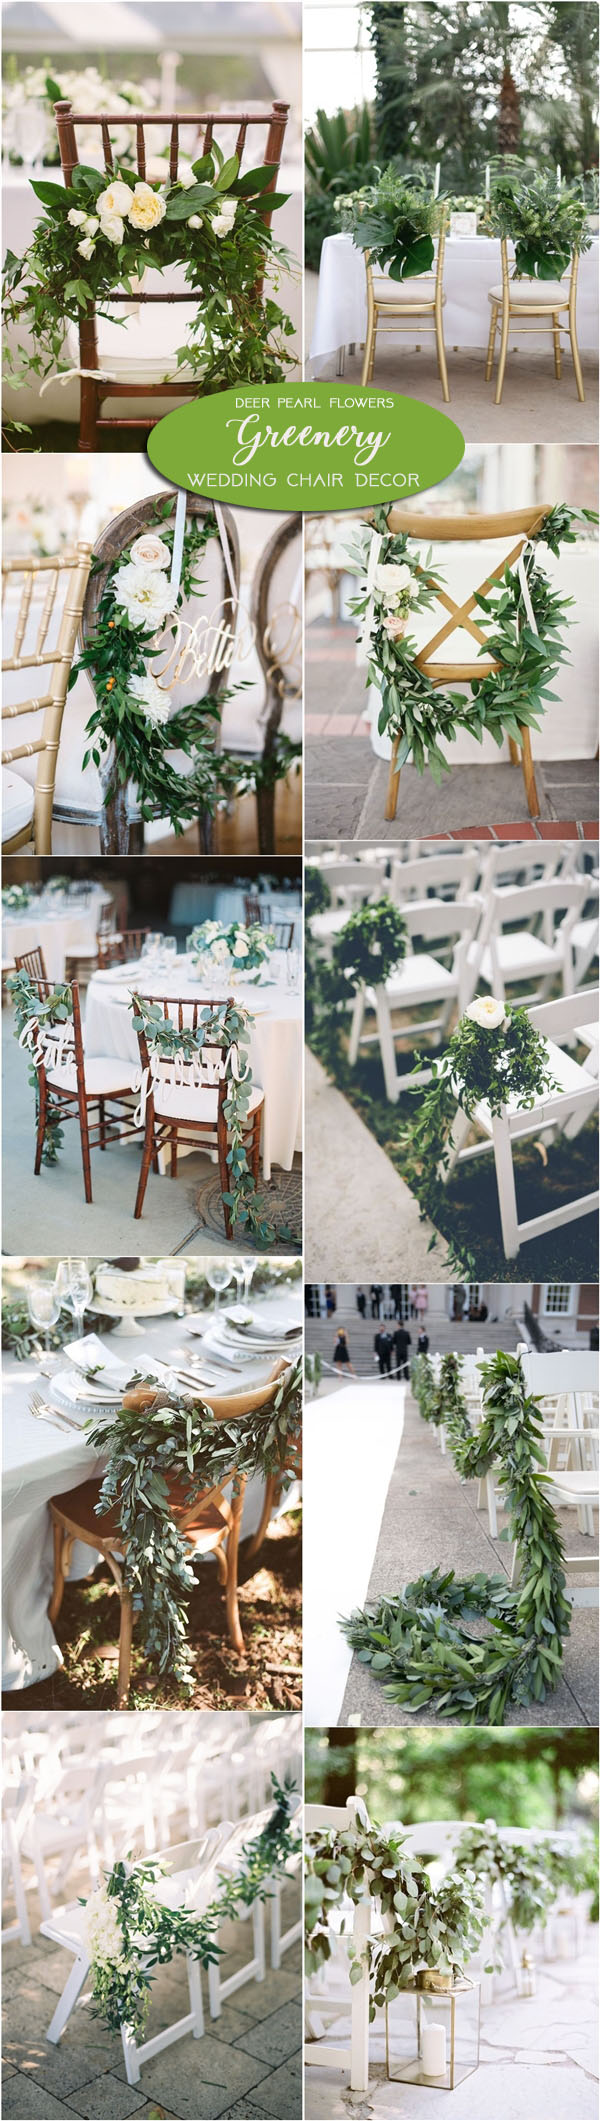 Greenery wedding aisle and wedding chair decor